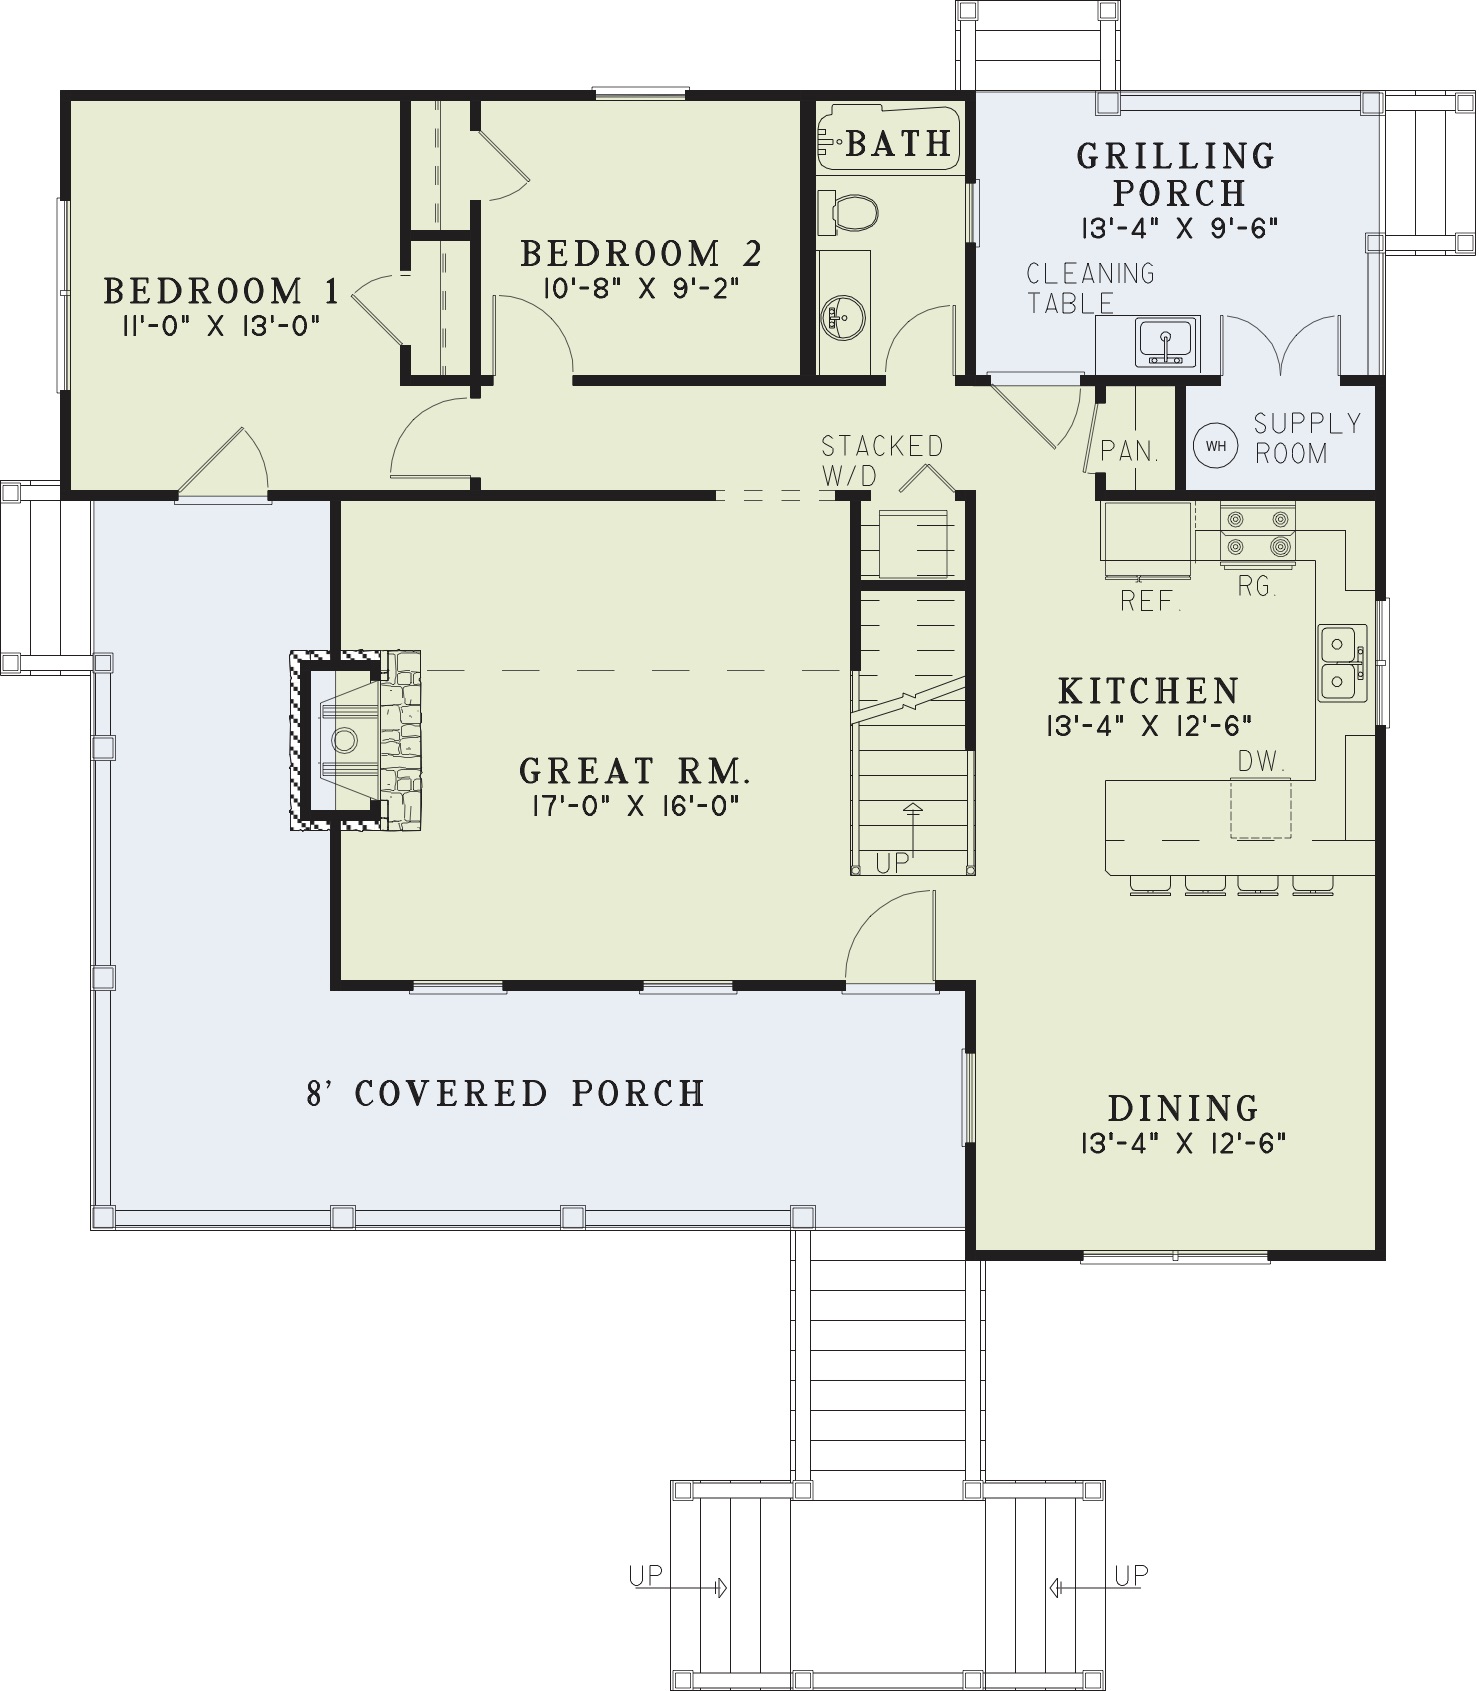 House Plan NDG 1190 Main Floor